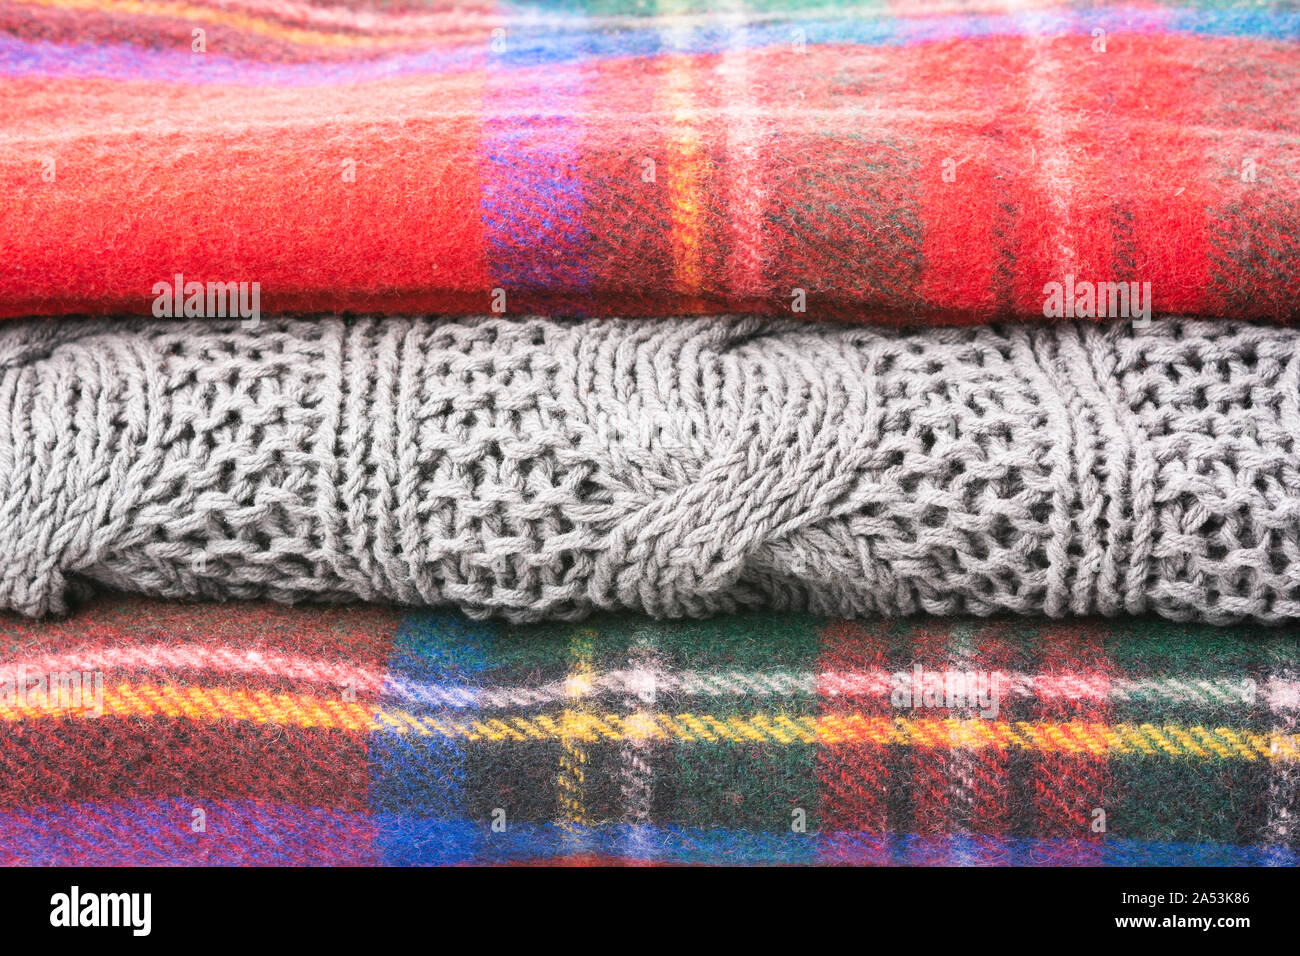 Stapel von gemütlichen Winter Wolldecken in Tartan rot, blau, grau Farben, selektiven Fokus Stockfoto